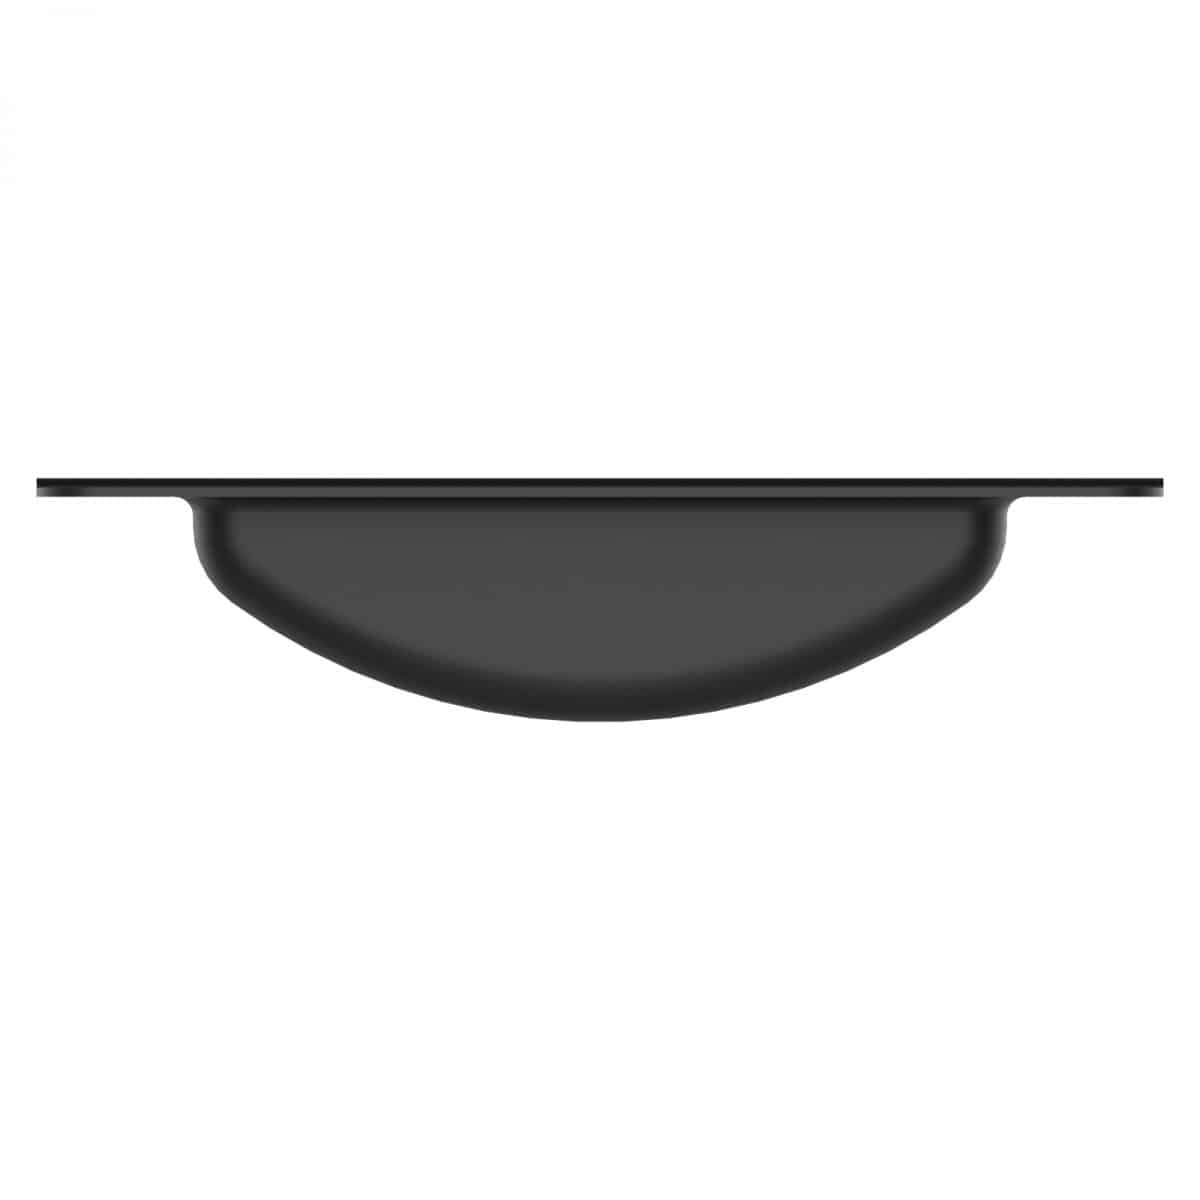 ARMOR YR-6202 Black Castor Dish with Medium Recess for 4'' Castors